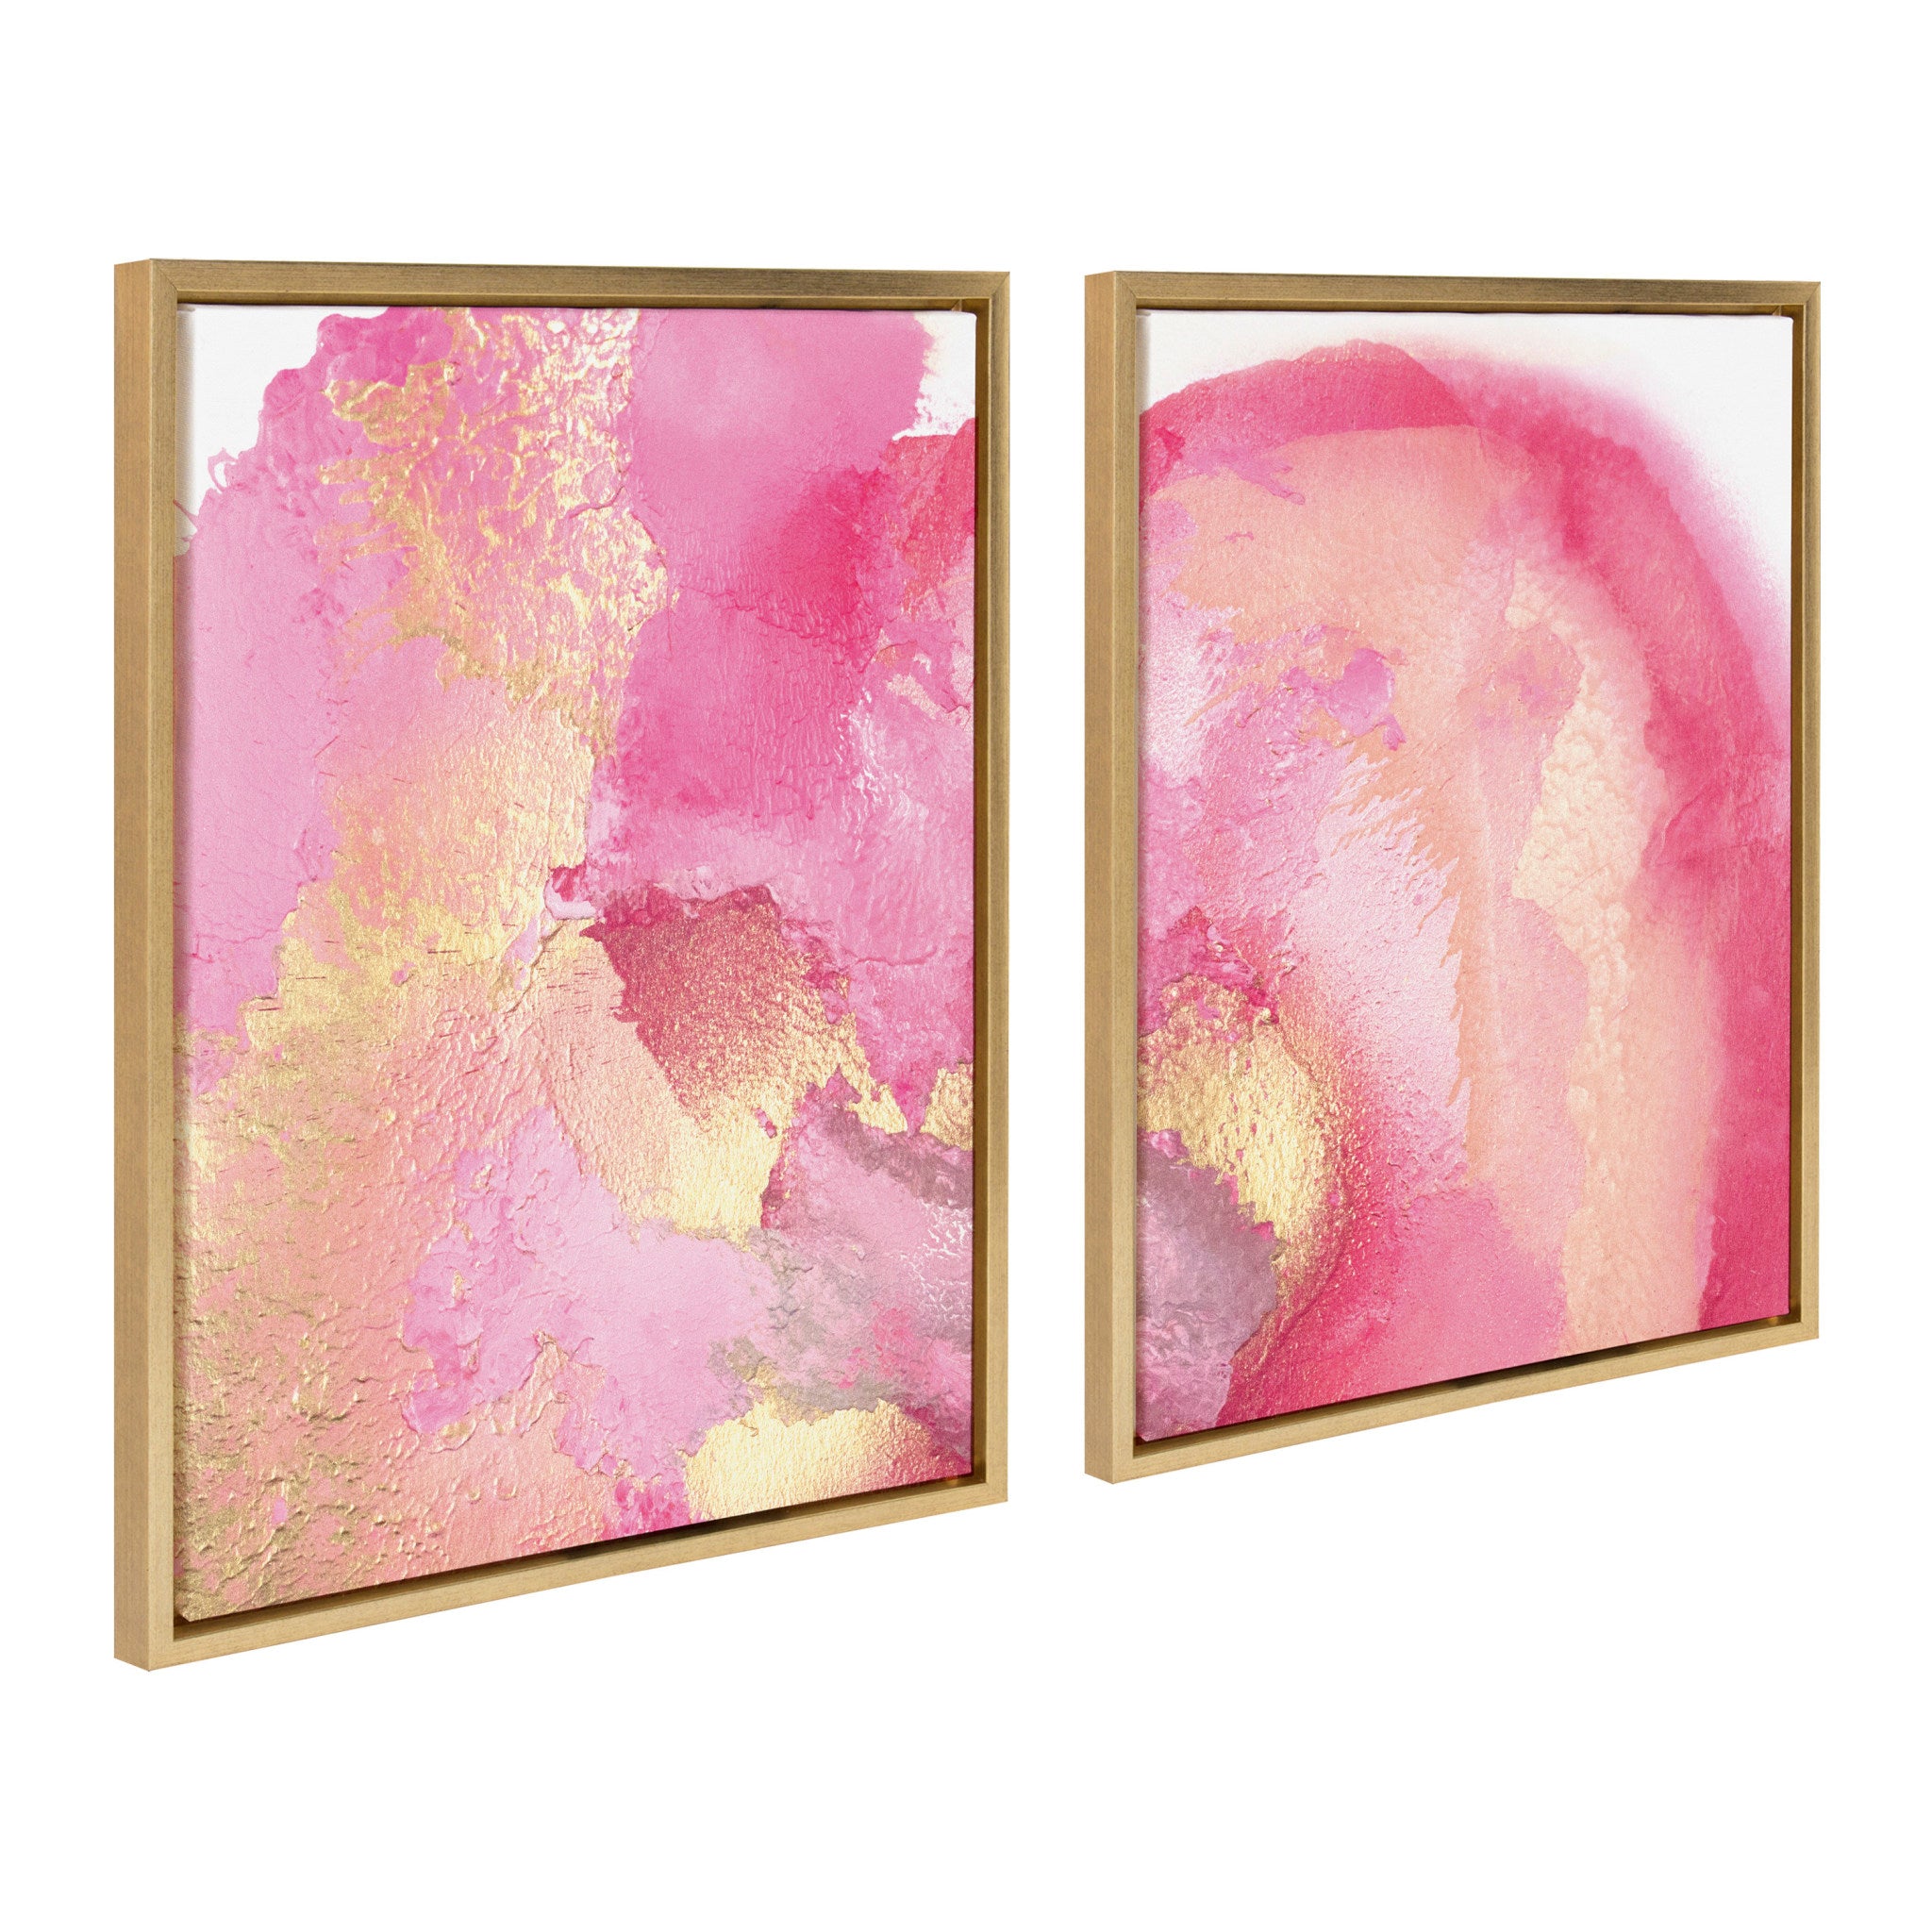 Sylvie MP Pink Golden Hour 1 and 2 Framed Canvas Art Set by Mentoring Positives